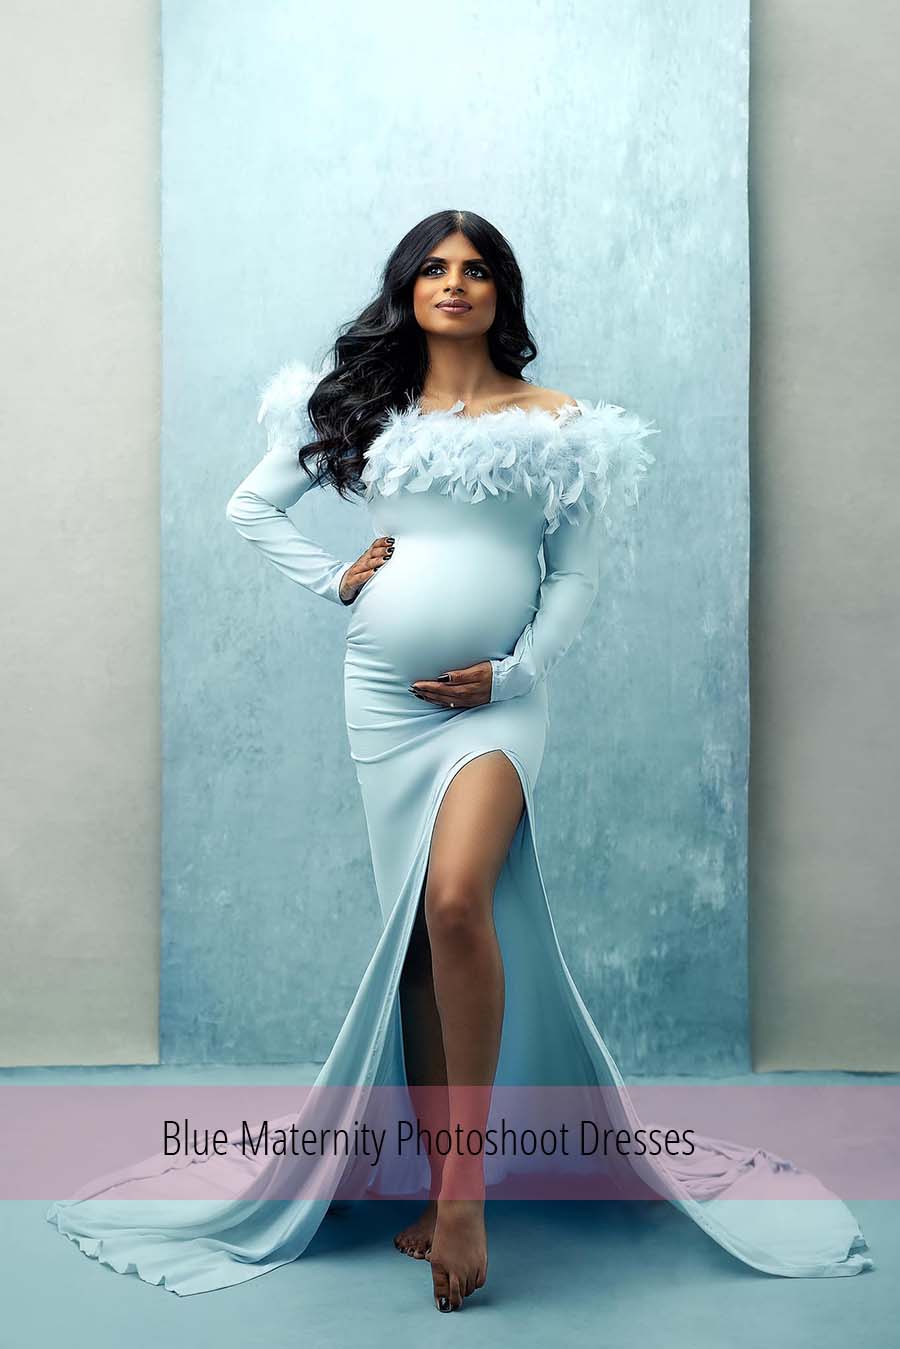 Blue Maternity Photoshoot Dresses | Mii-Estilo.com